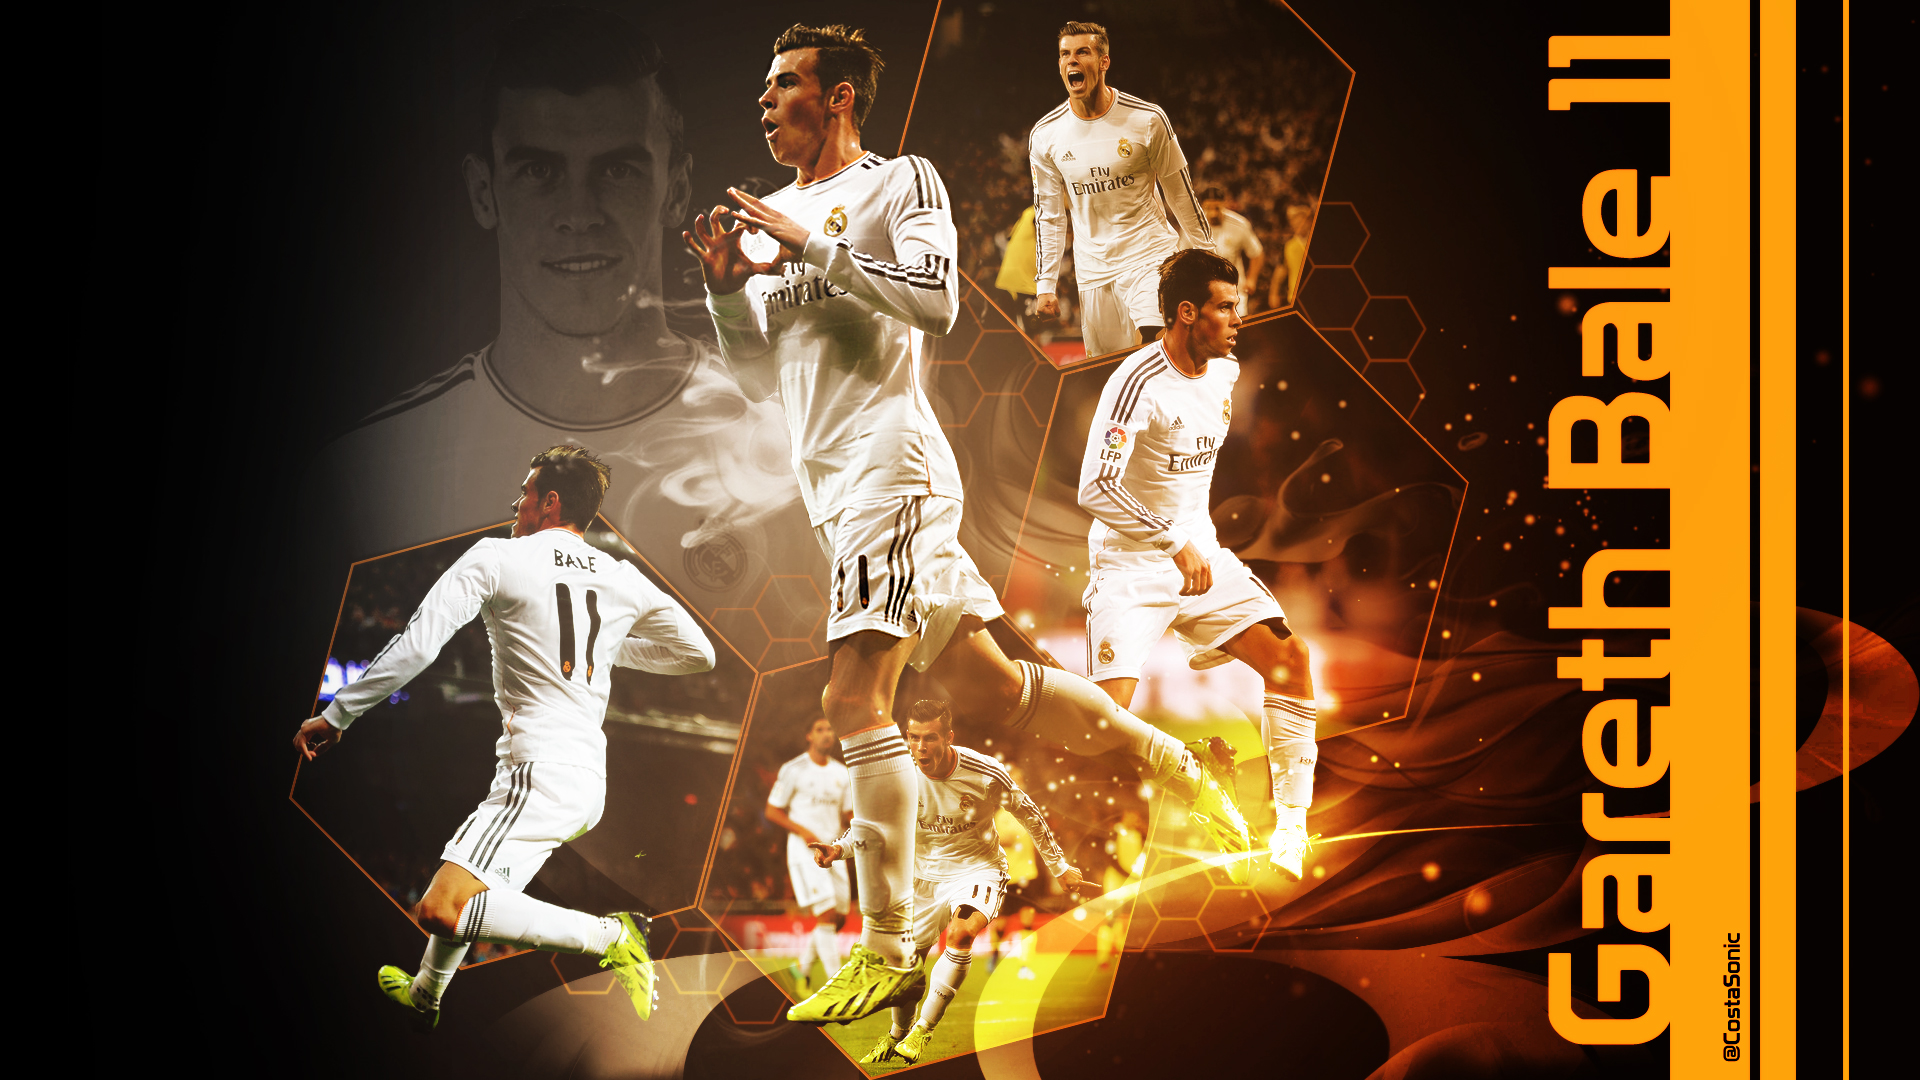 Gareth Bale Real Madrid wallpaper by BardockSonic on DeviantArt